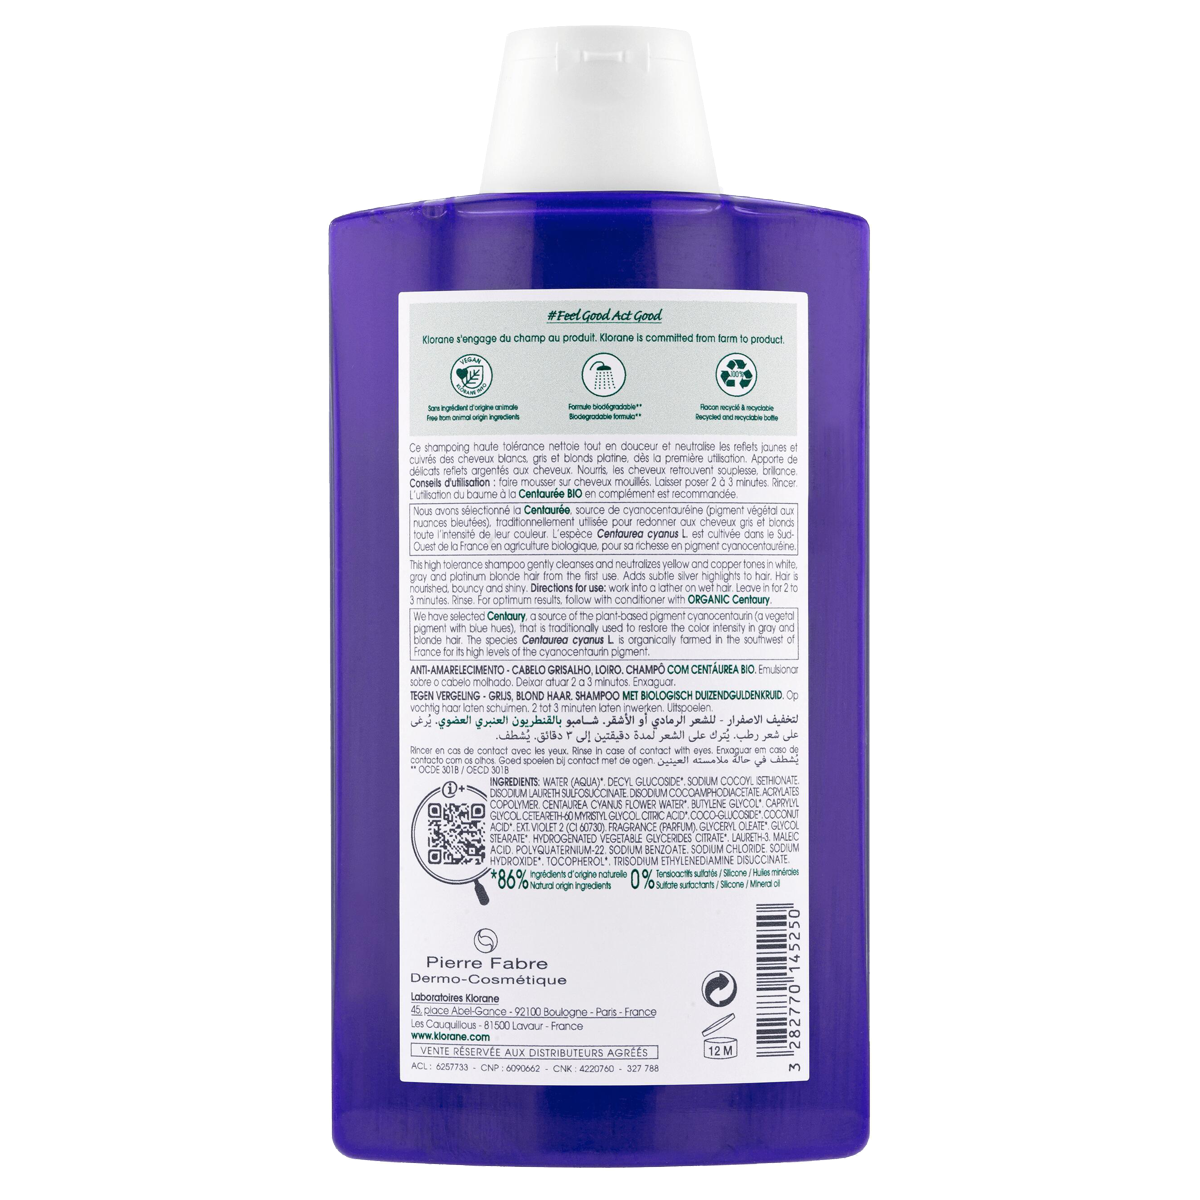 Klorane Kornblumen Bio Shampoo 200 ml